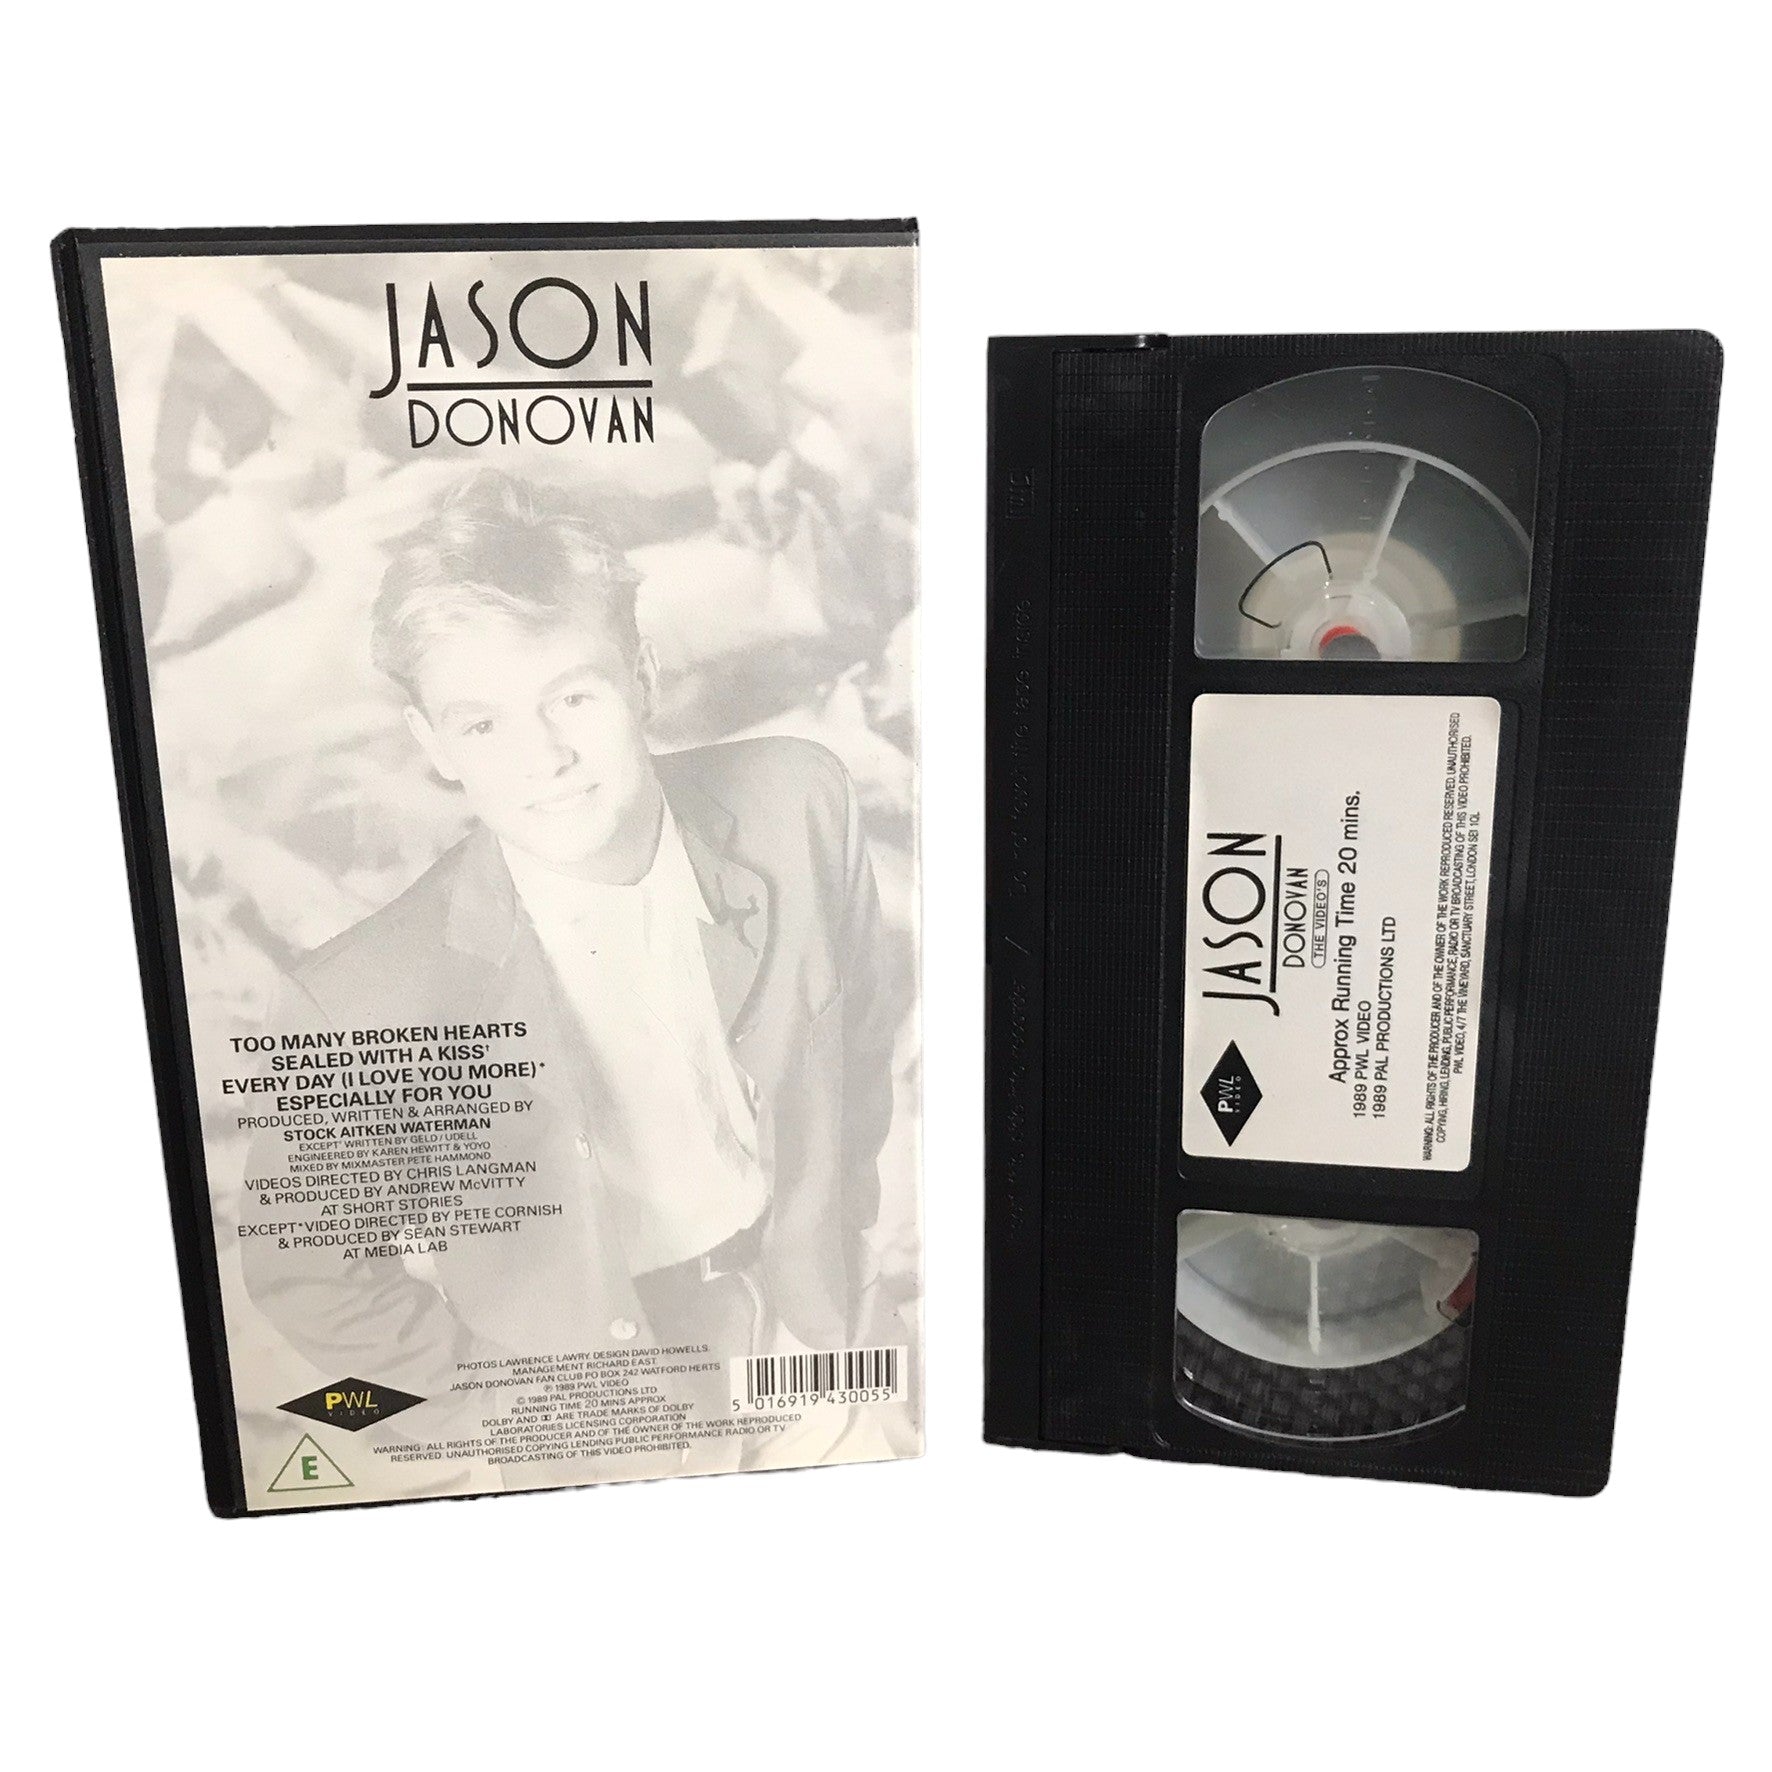 Jason Donovan The Video's - PWL Video - Music - Pal - VHS-